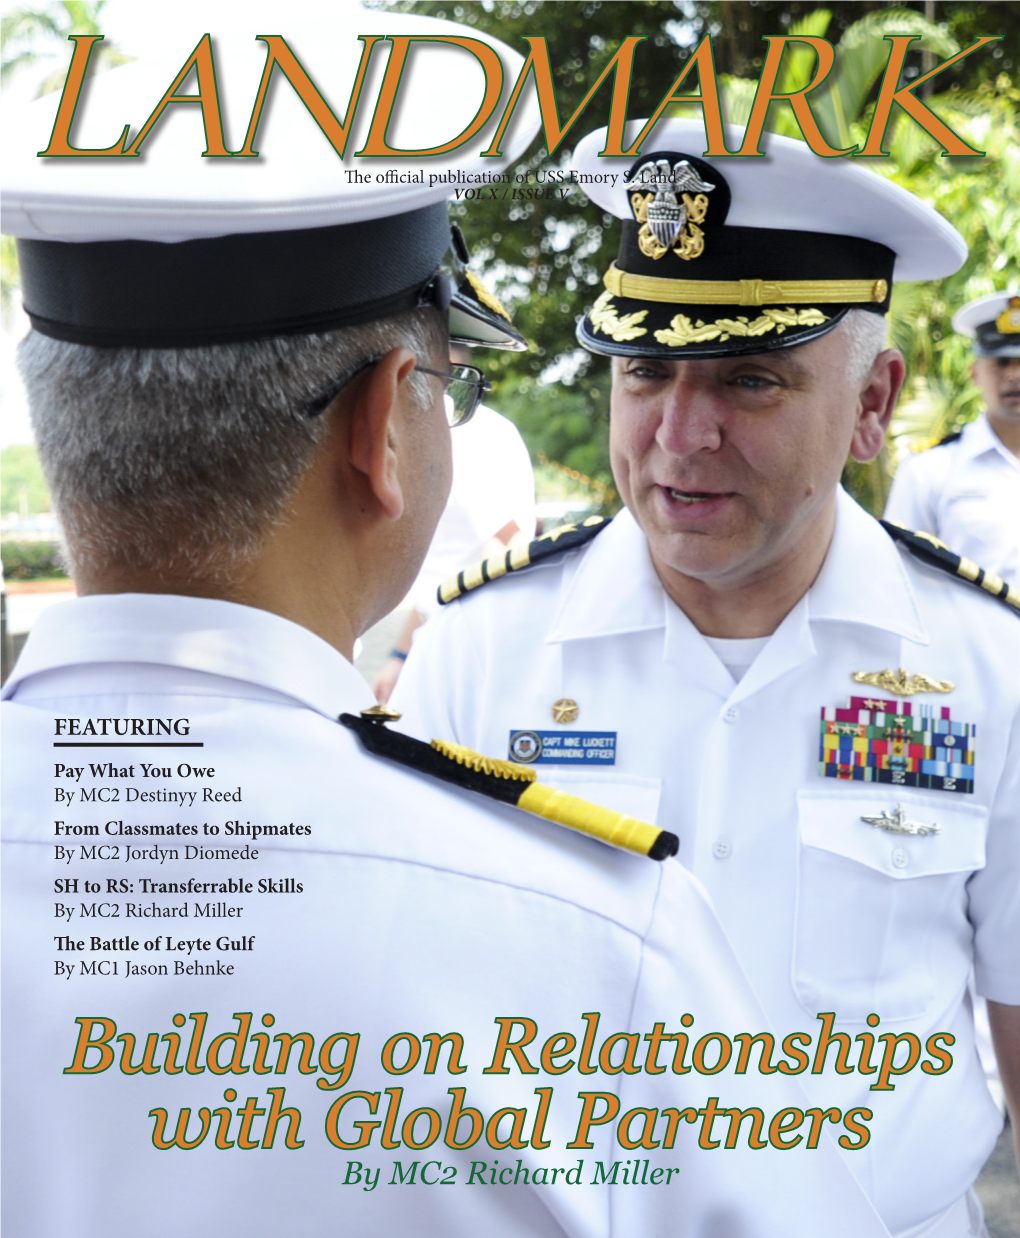 Building on Relationships with Global Partners by MC2 Richard Miller LANDMARK MAGAZINE LEADERSHIP Pg